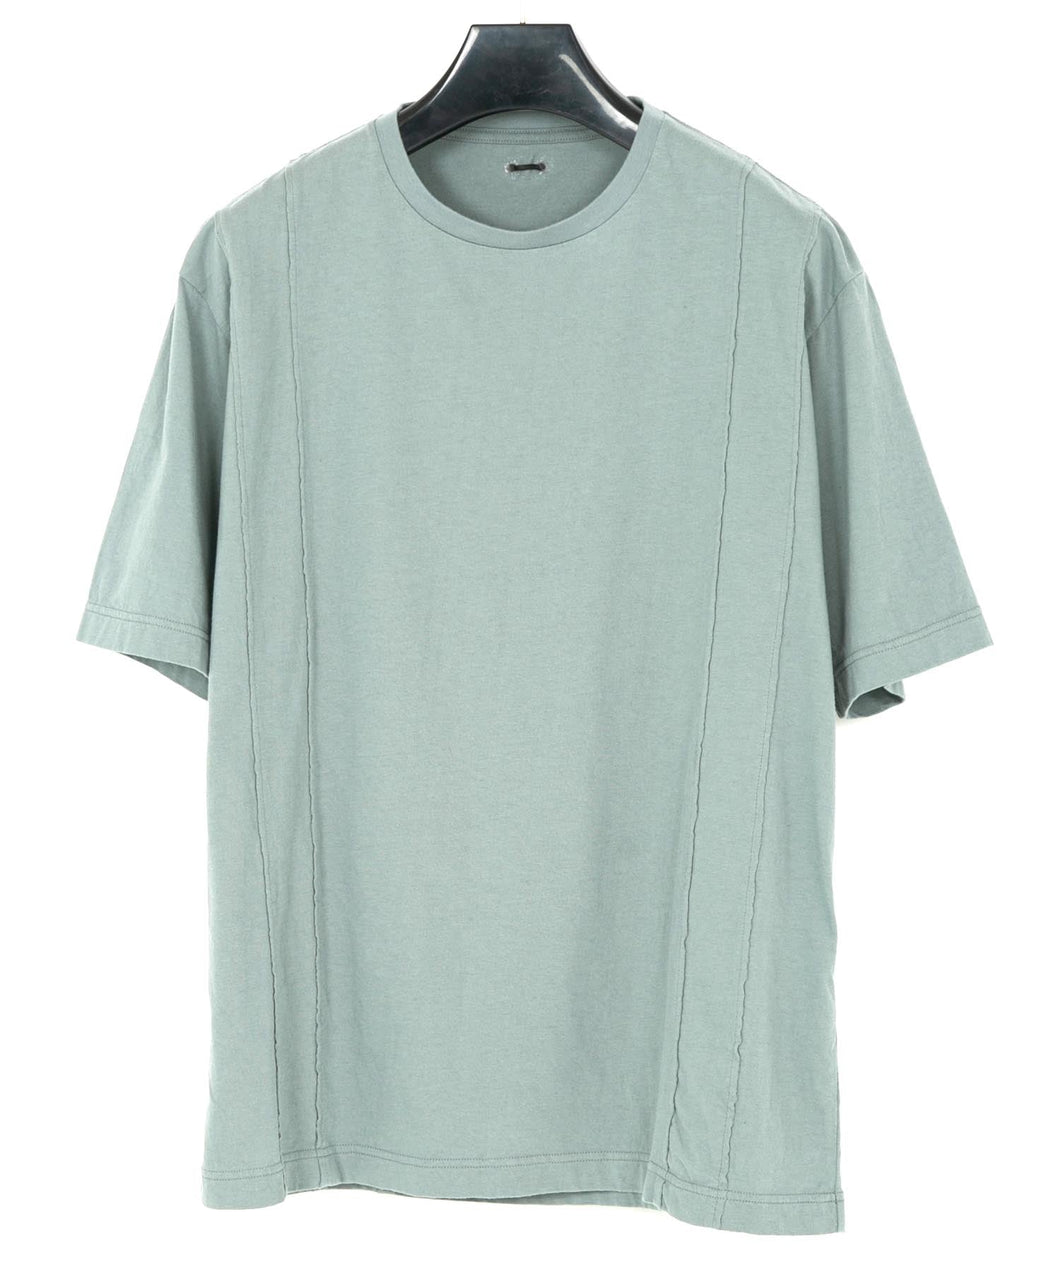 Natural Soft Cotton Oversize Crew Neck T-shirt - BLUE GRAY